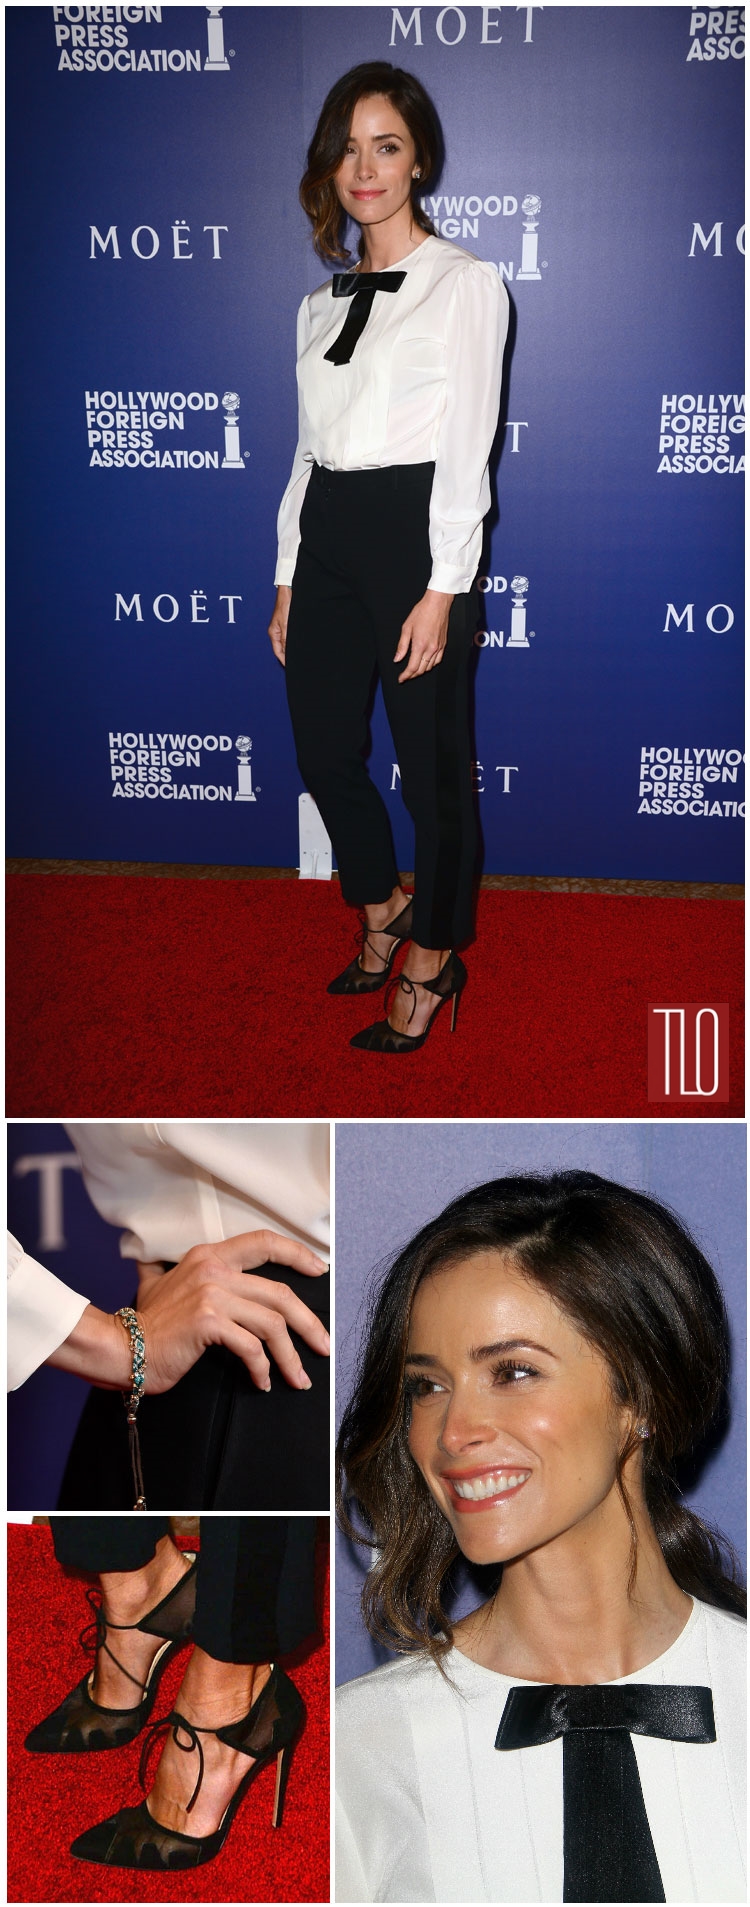 Abigail-Spencer-Dolce-Gabbana-2014-HFPA-Grants-Banquet-Tom-Lorenzo-Site-TLO (2)